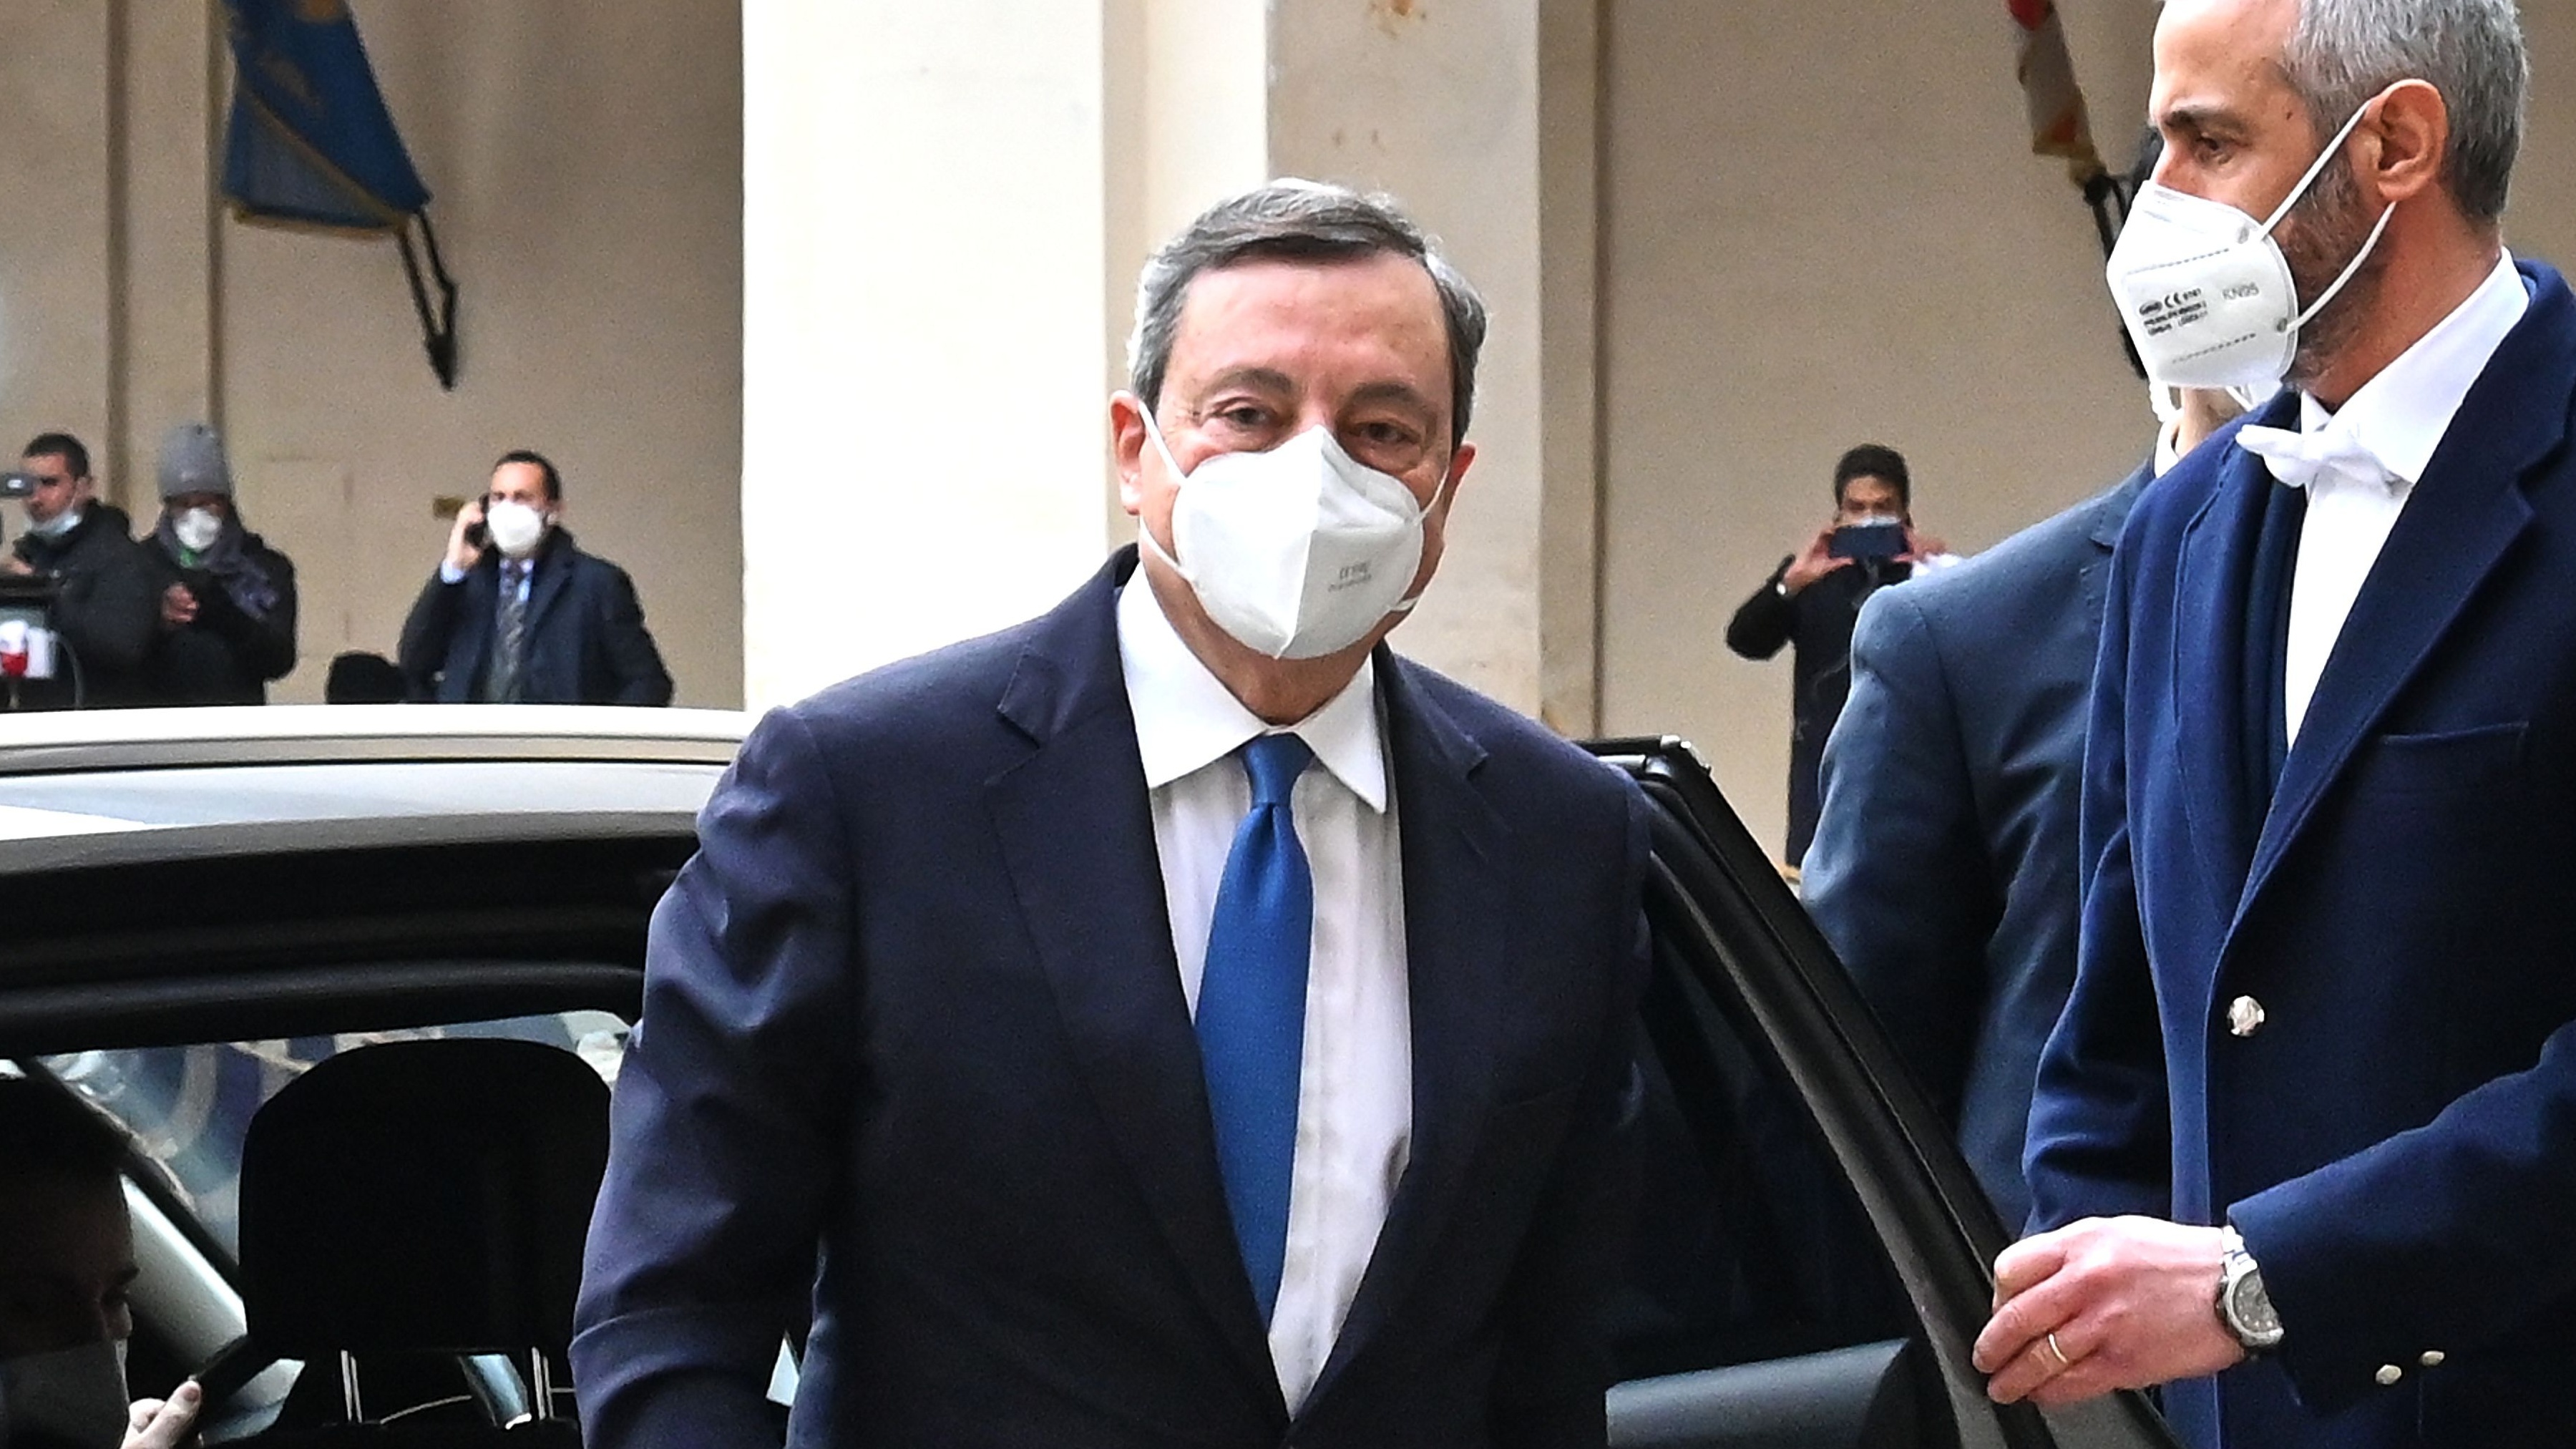 Mario Draghi arrives at the Quirinal Palace to meet with Italian President Sergio Mattarella